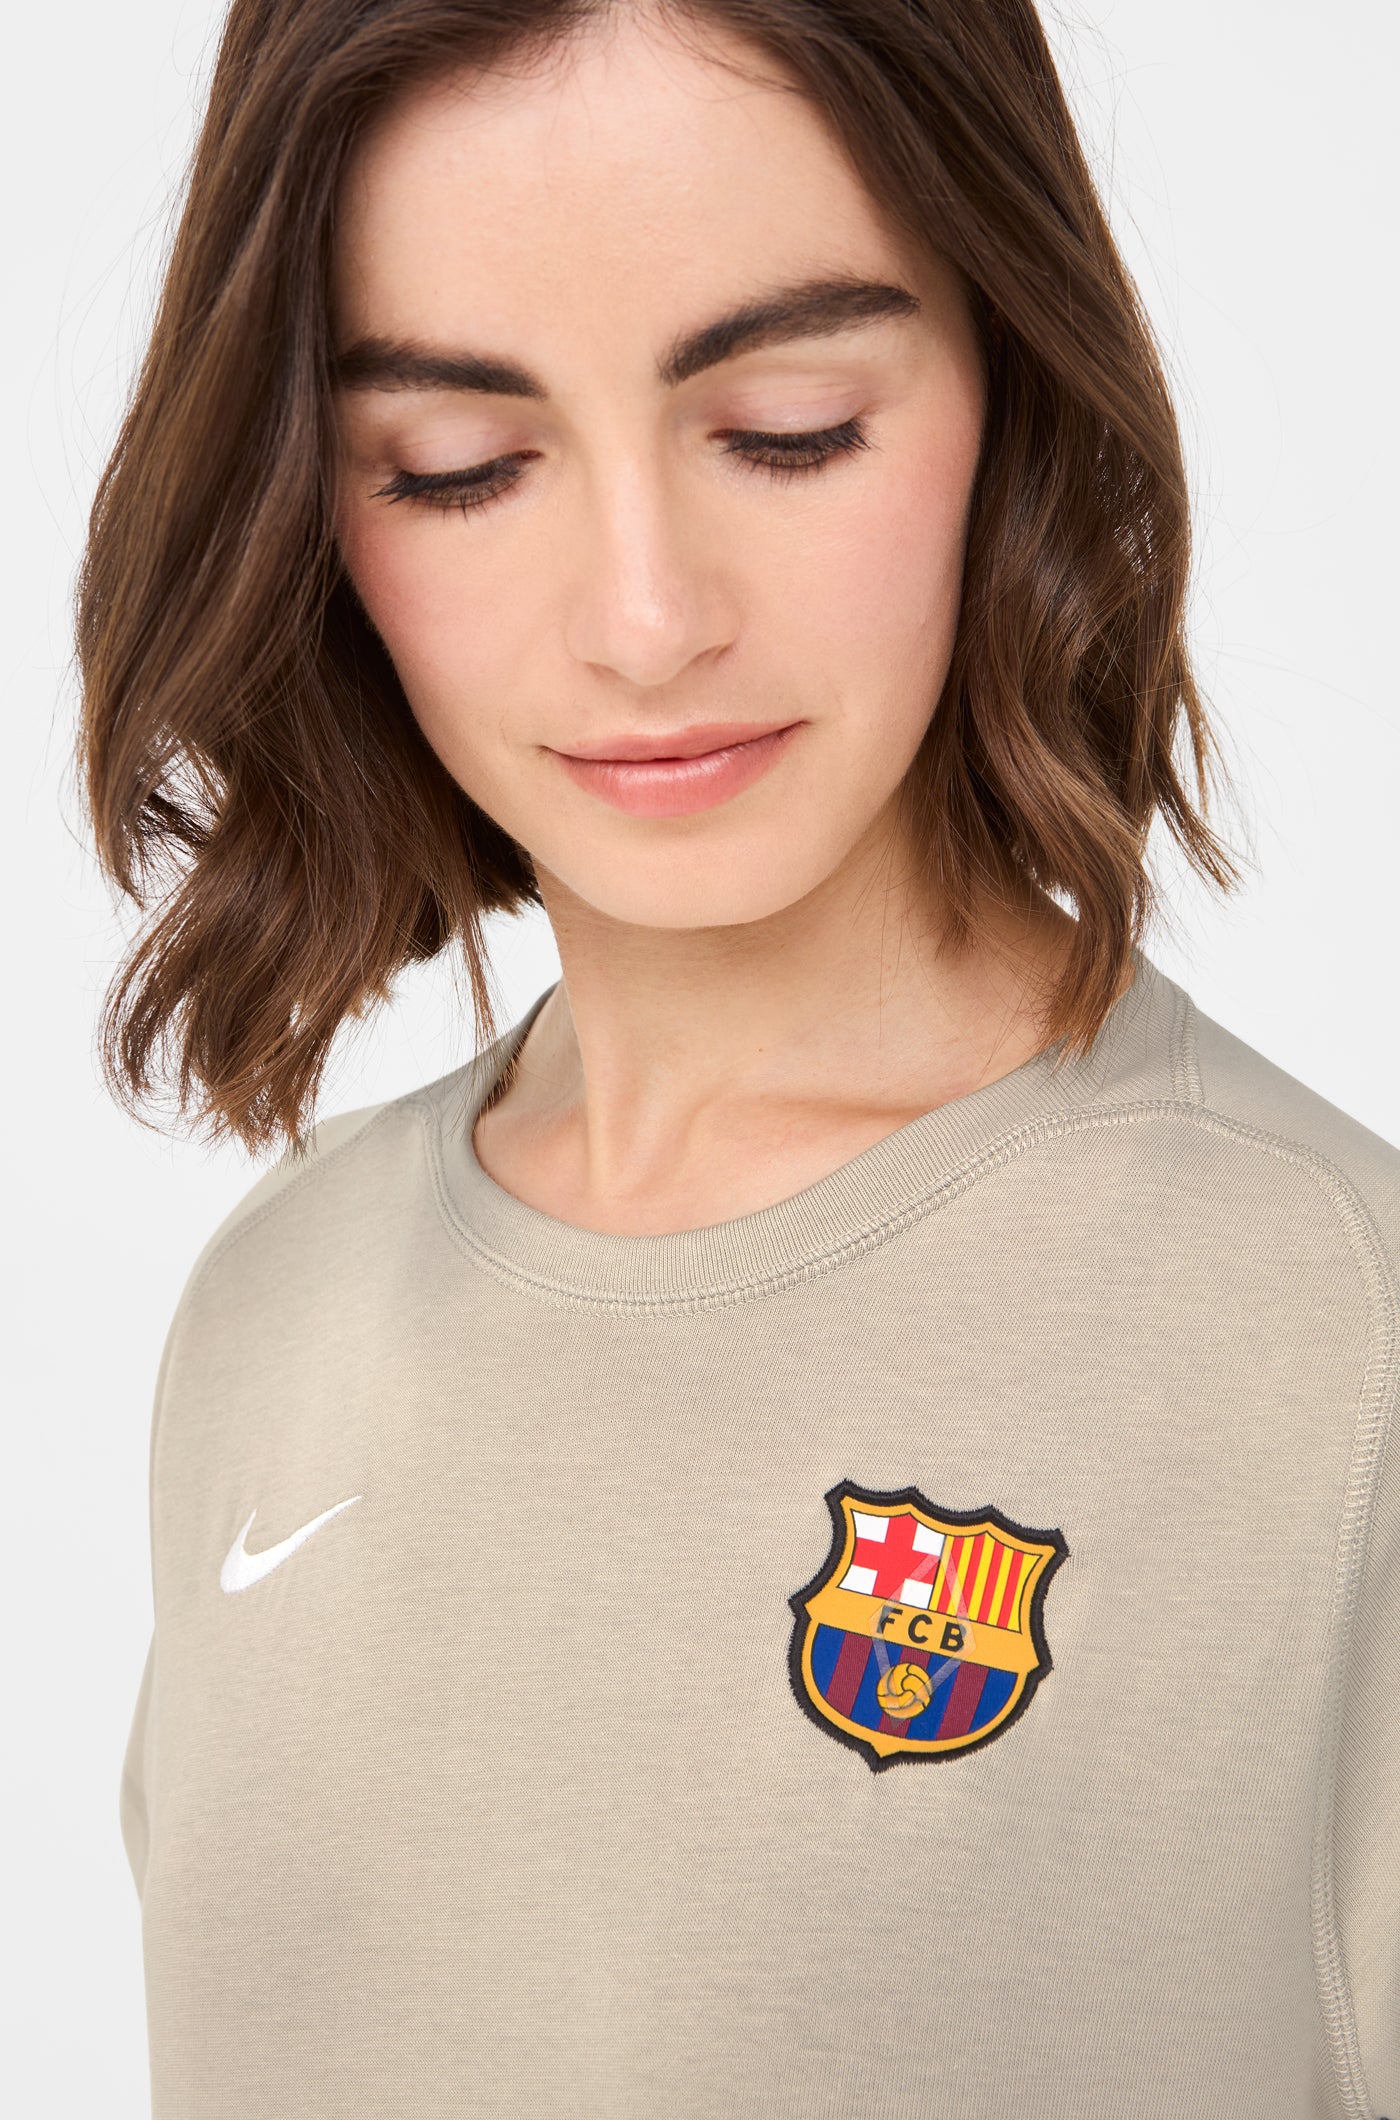 Samarreta beix Barça Nike - Dona